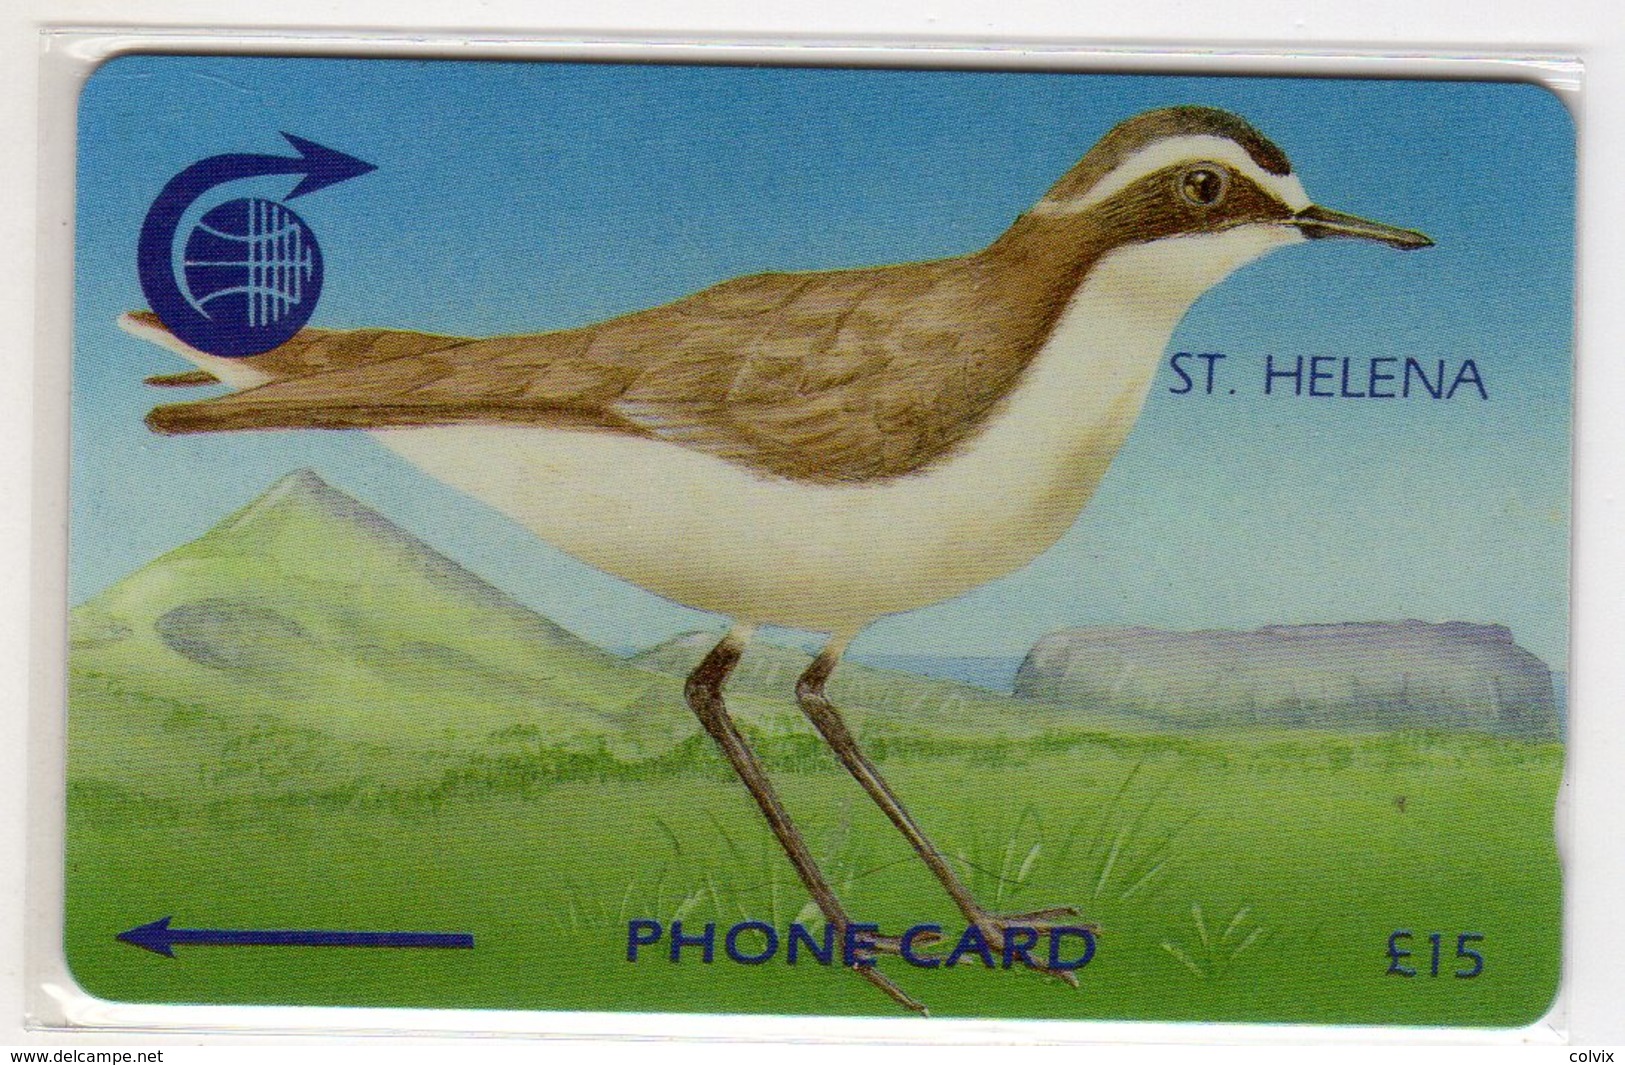 SAINTE-HELENE WIRE BIRD 15 £ Ref MV CARDS STH-09 NEUF MINT 2000 Ex. RARE - St. Helena Island